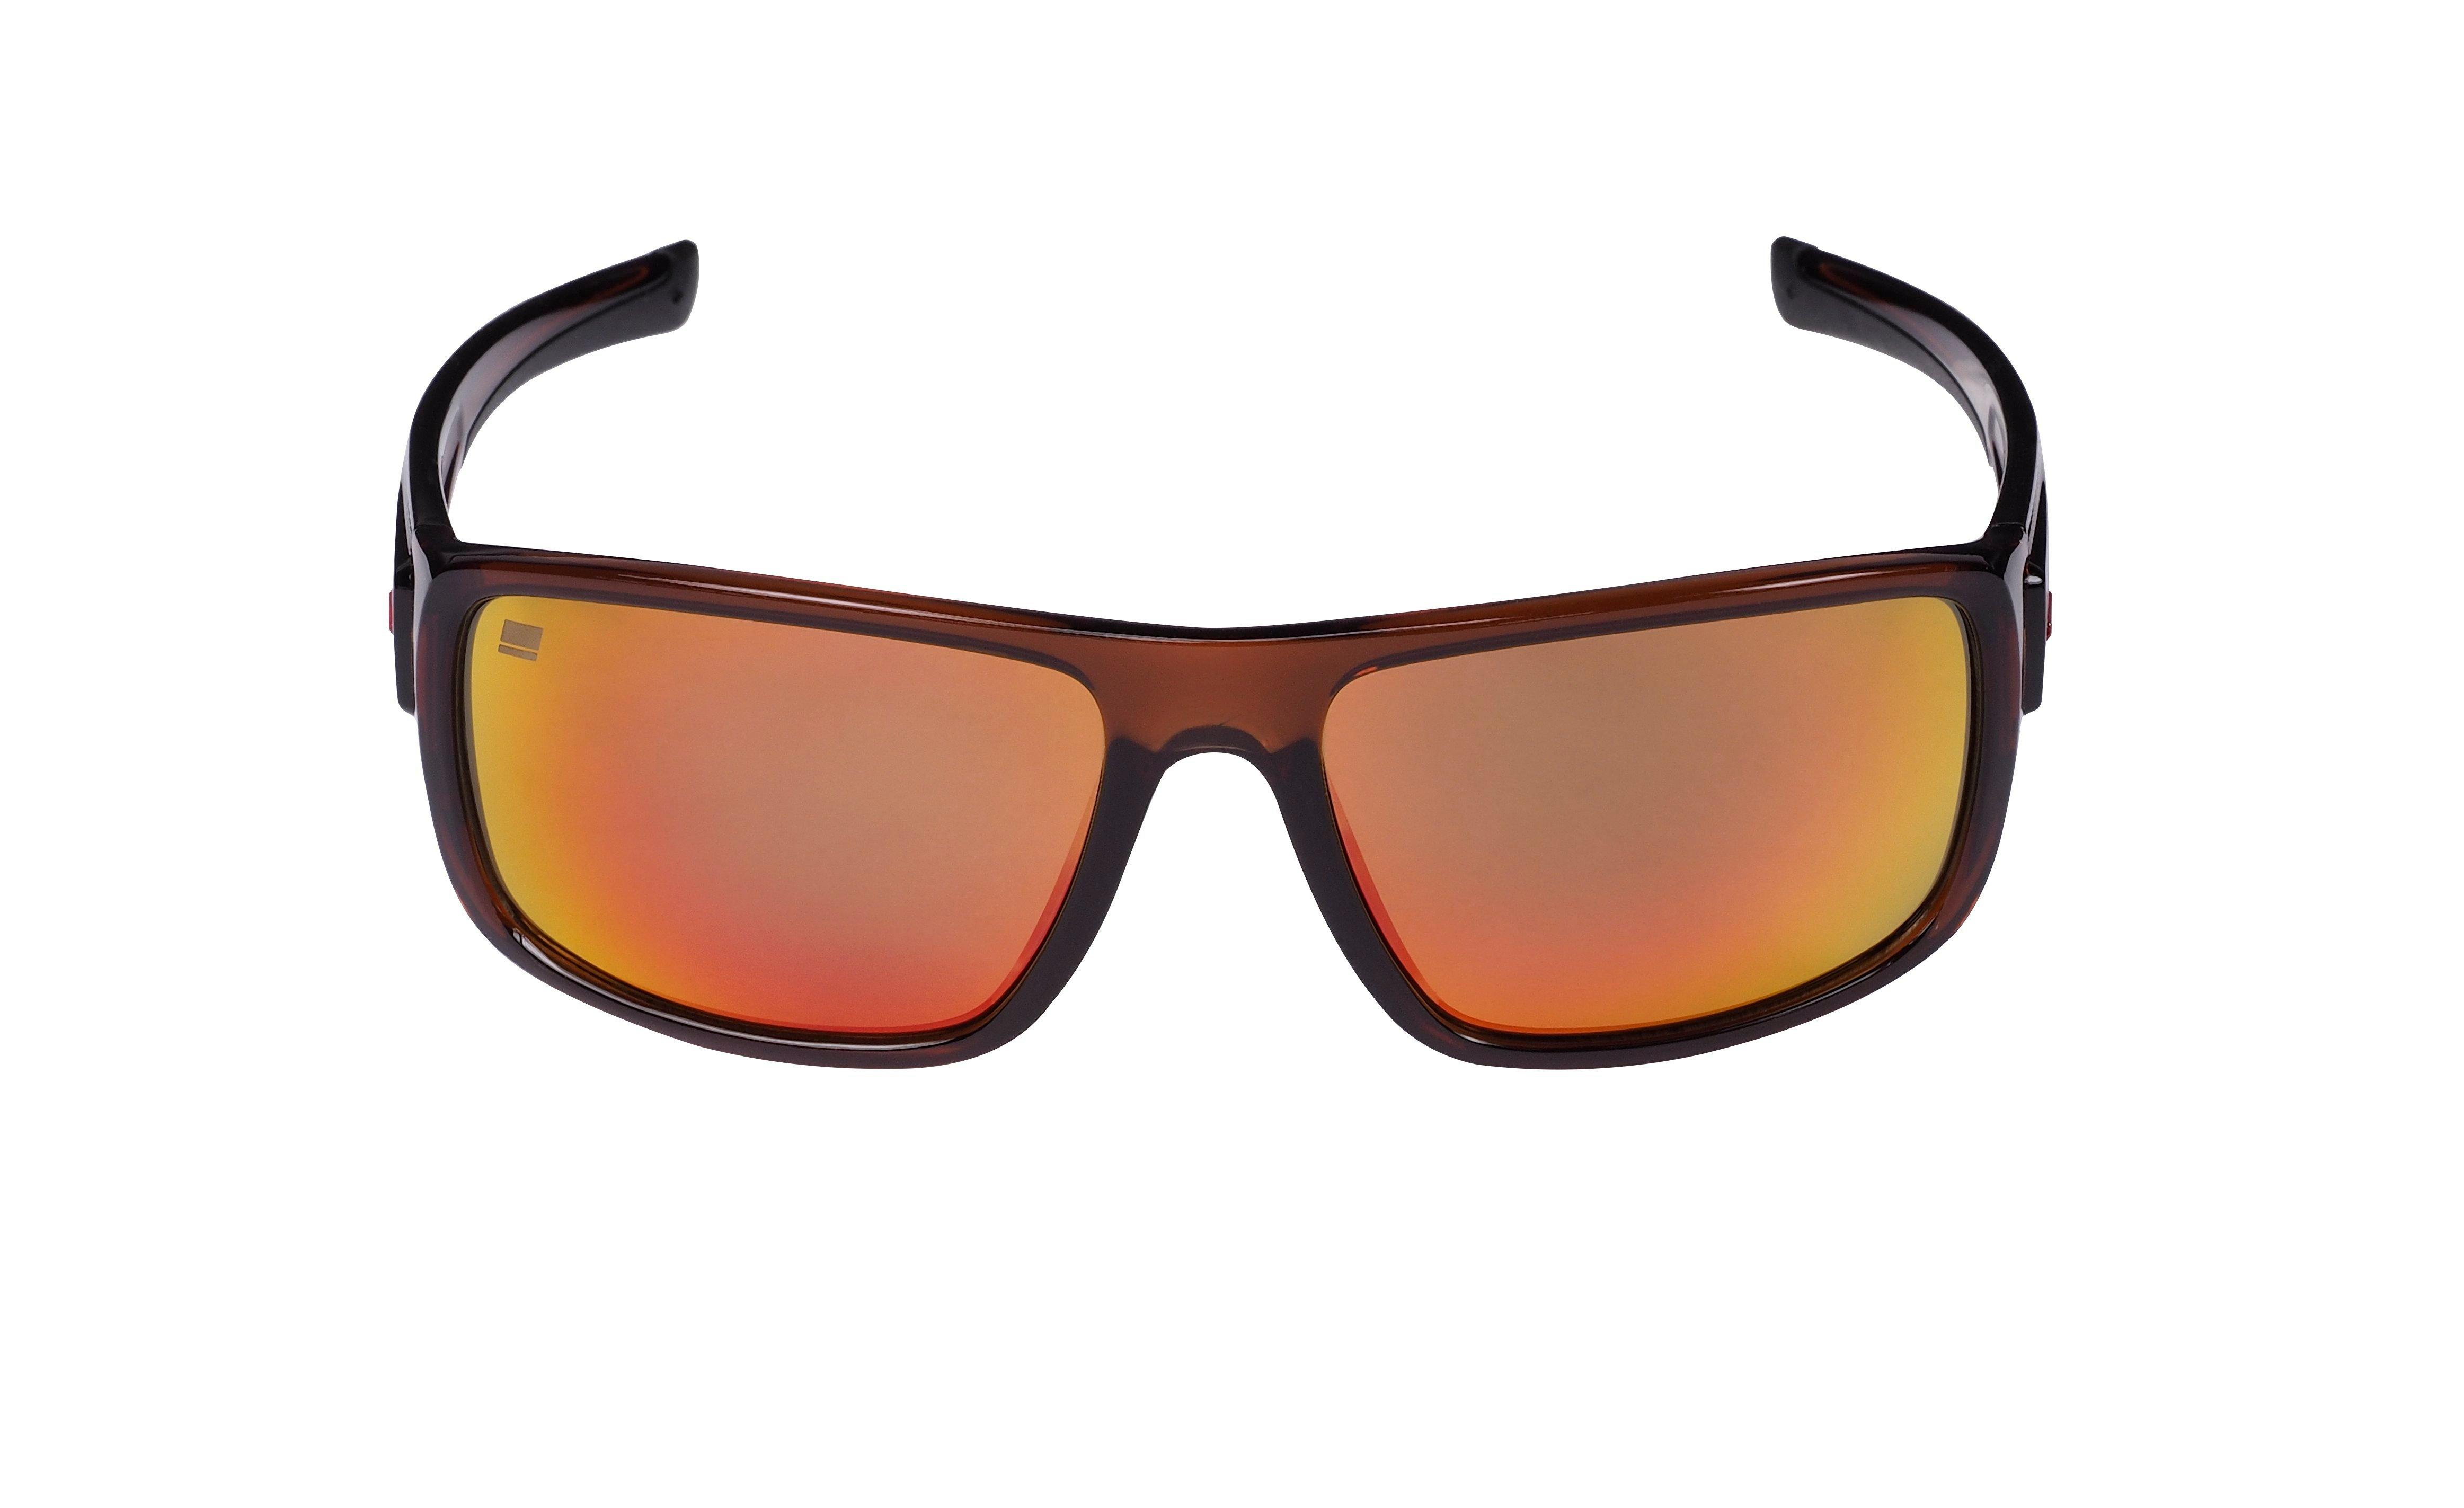 Abu Garcia Revo Eyewear Polarized Sunglasses - Flame Red